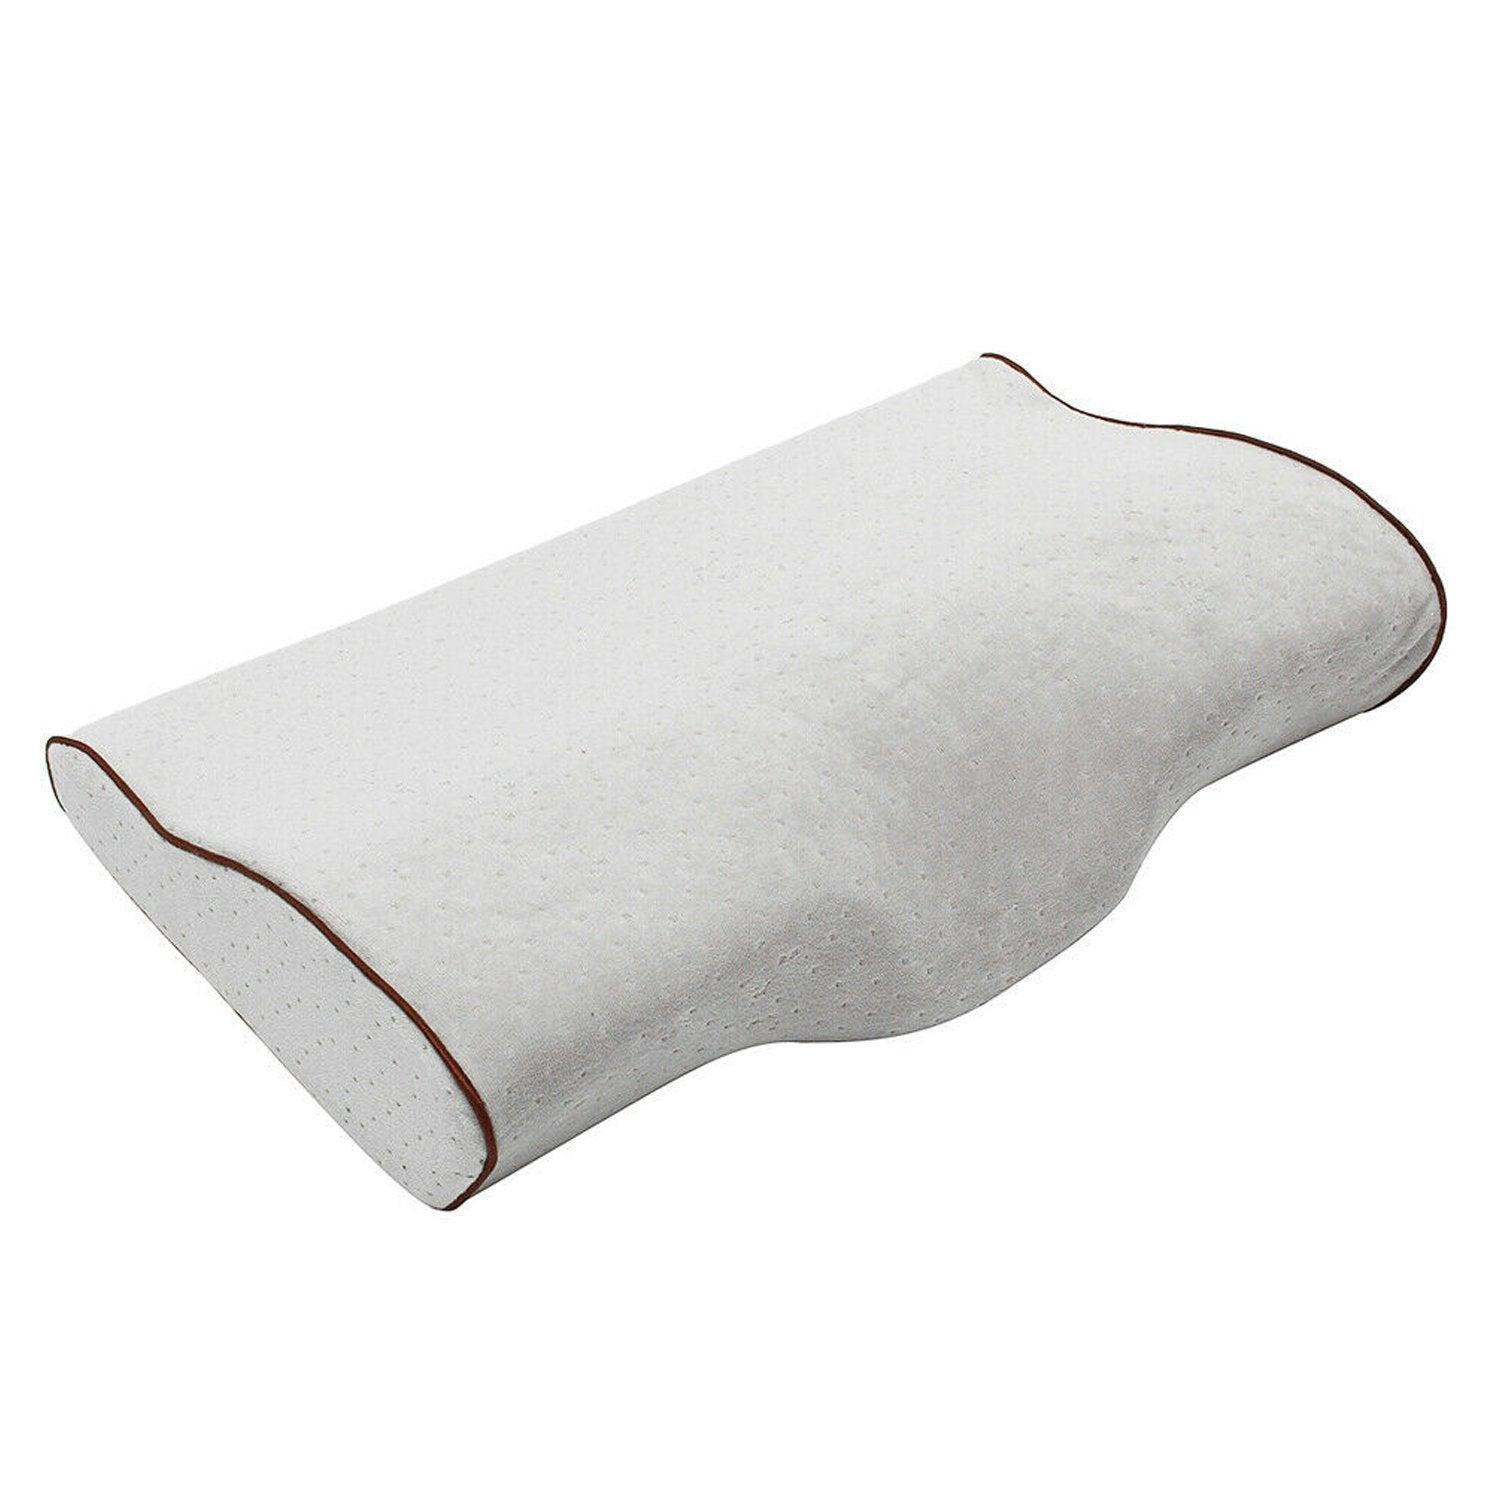 Neck Care Rebound Contour Support Memory Foam Pillow - Grey